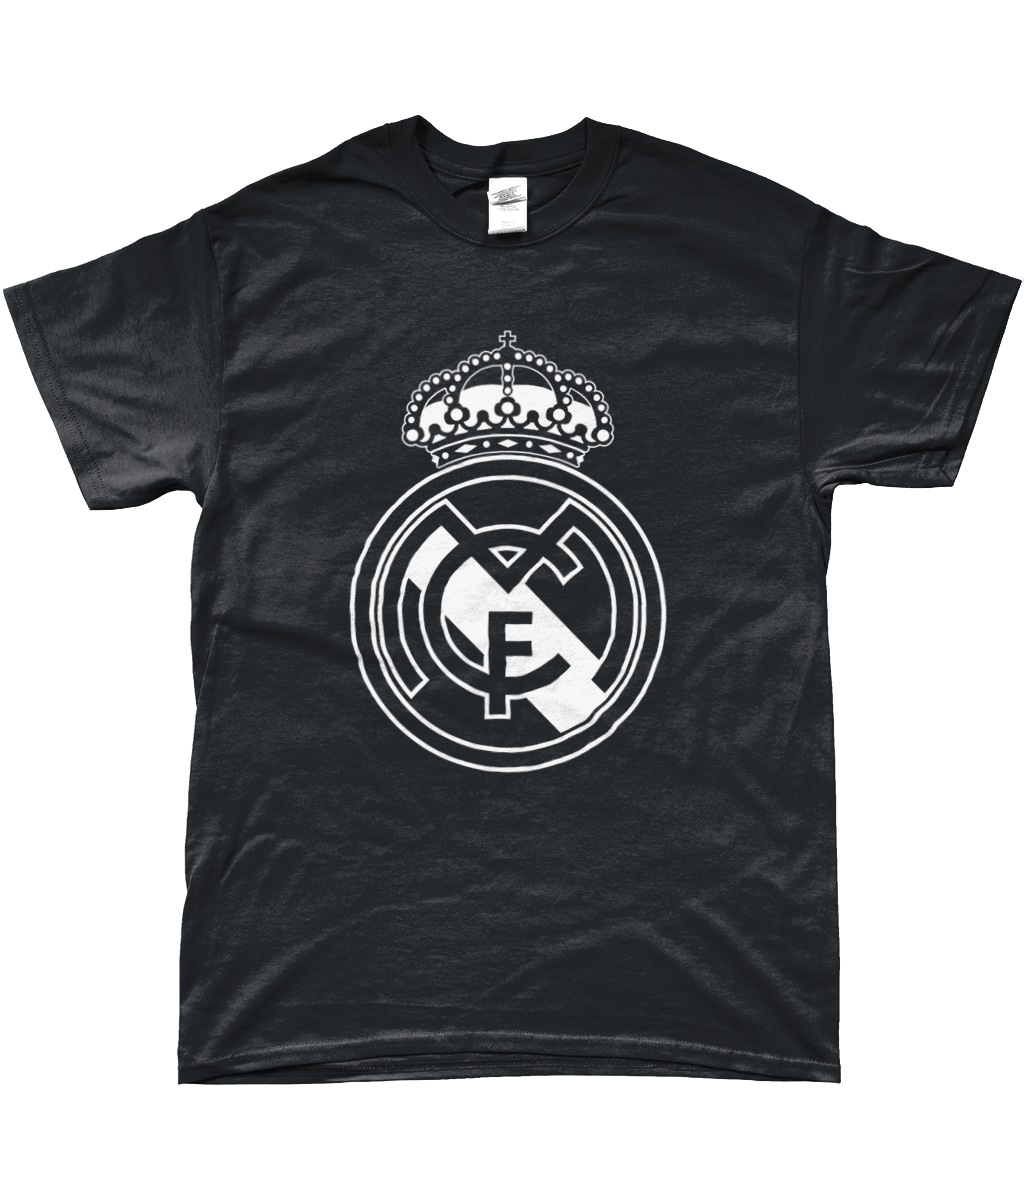 Real Madrid - Logo T-shirt